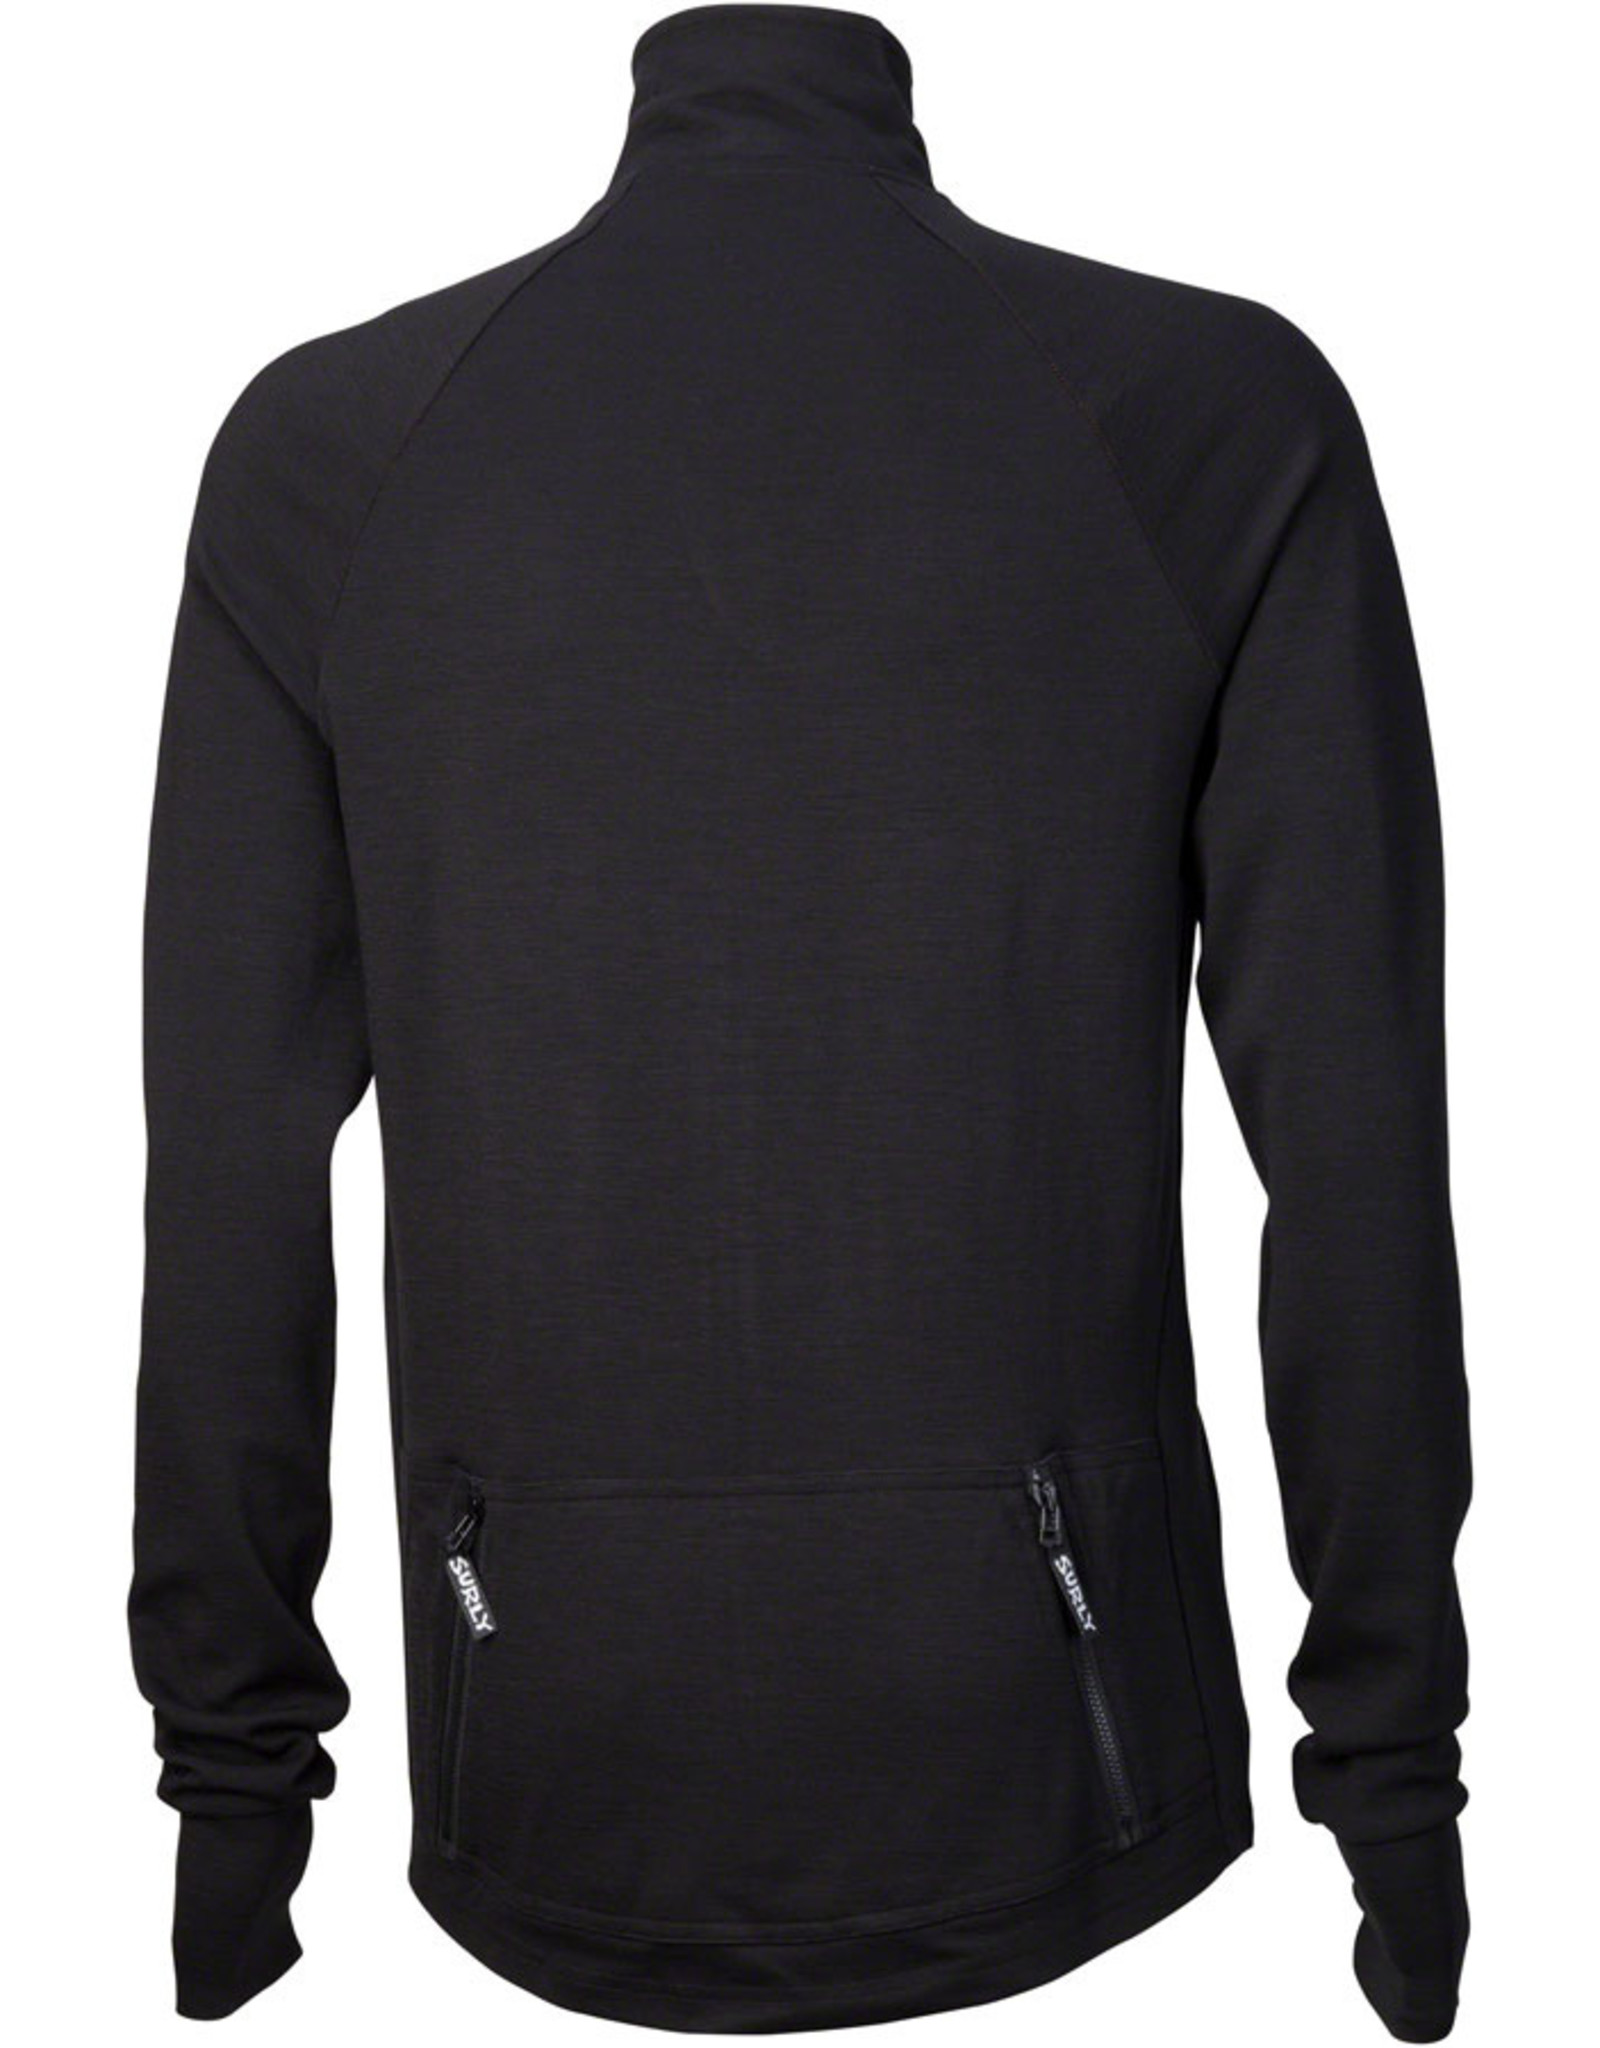 Surly Surly Merino Wool Jersey - Black, Long Sleeve, Men's, Small